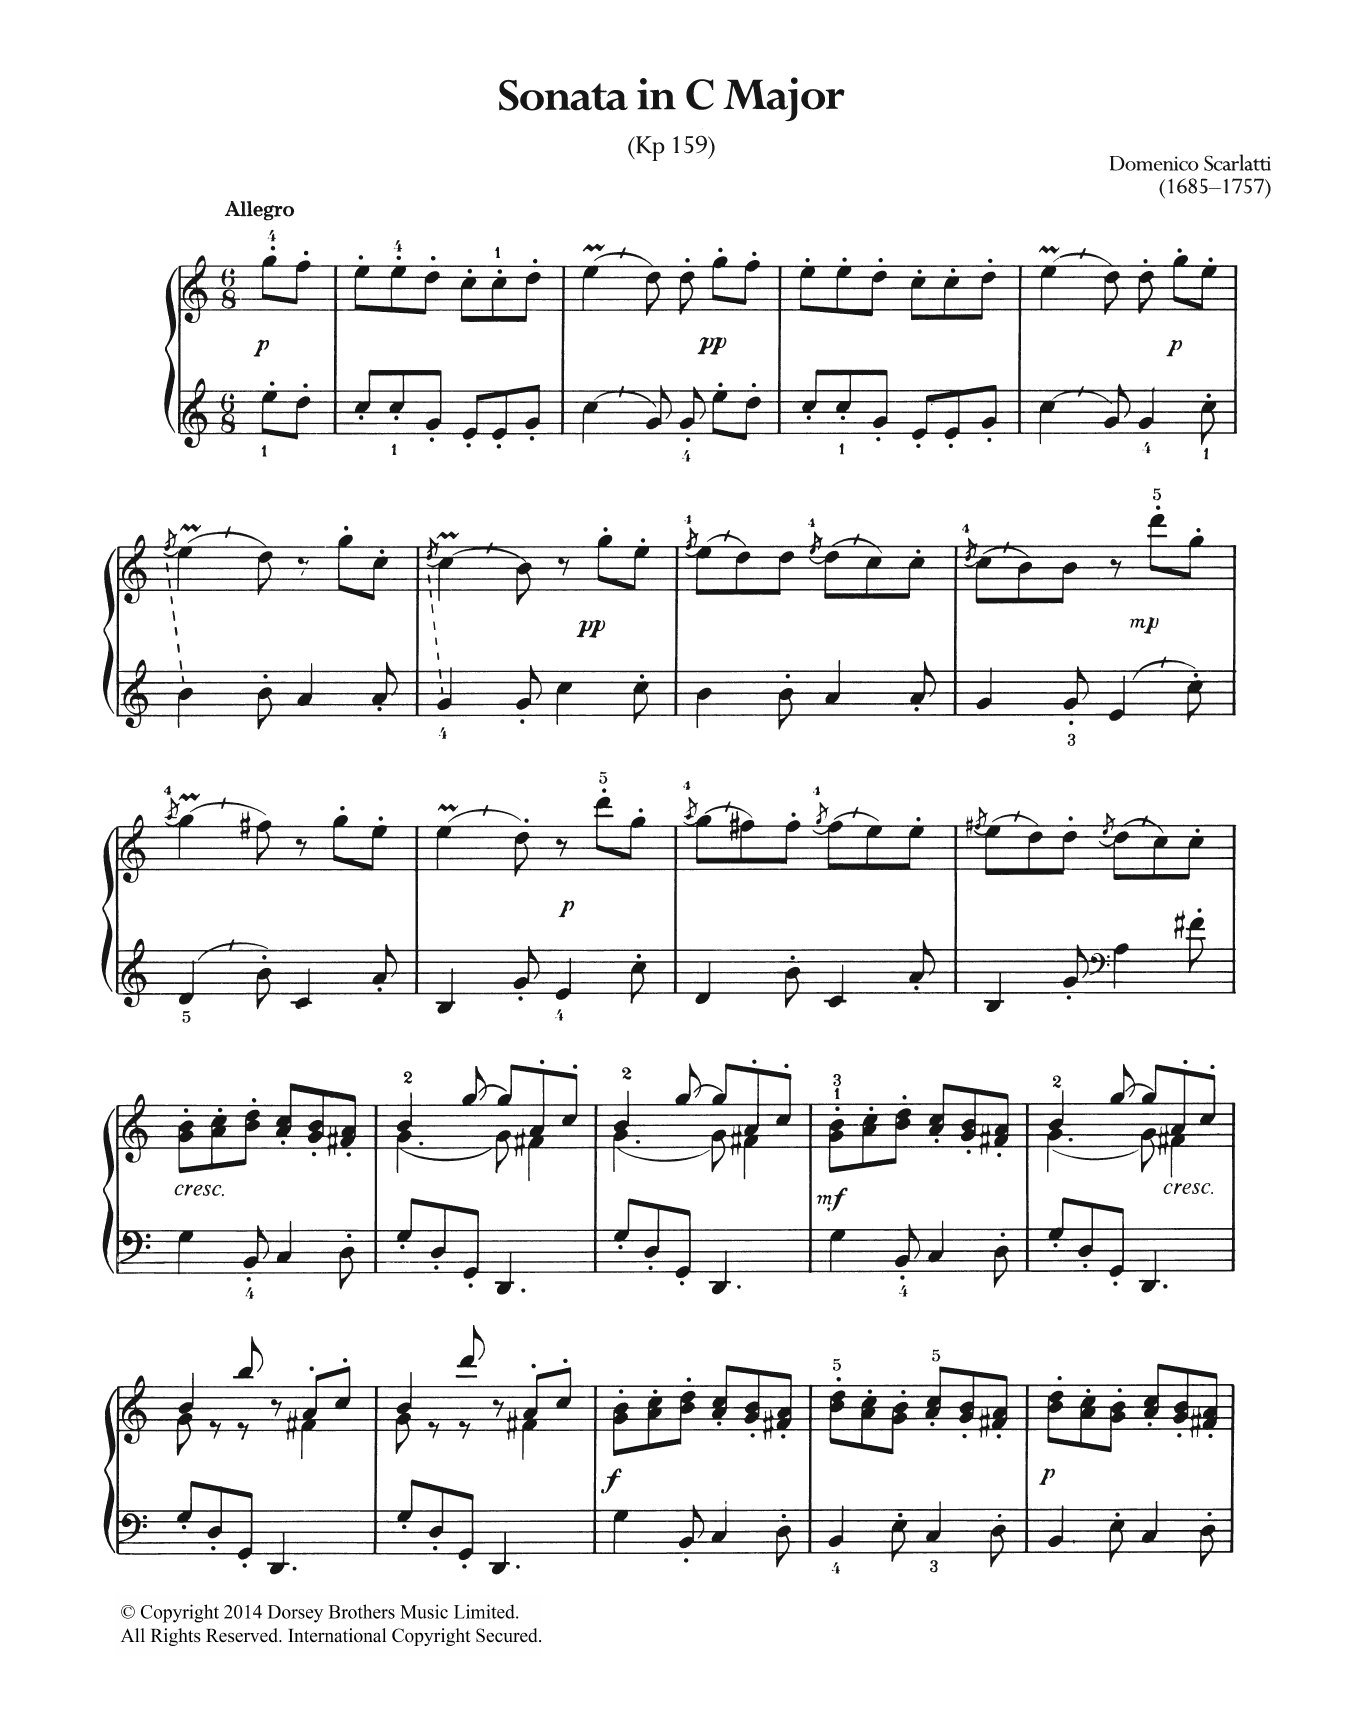 Domenico Scarlatti Sonata In C Major, K.159 sheet music notes and chords arranged for Piano Solo